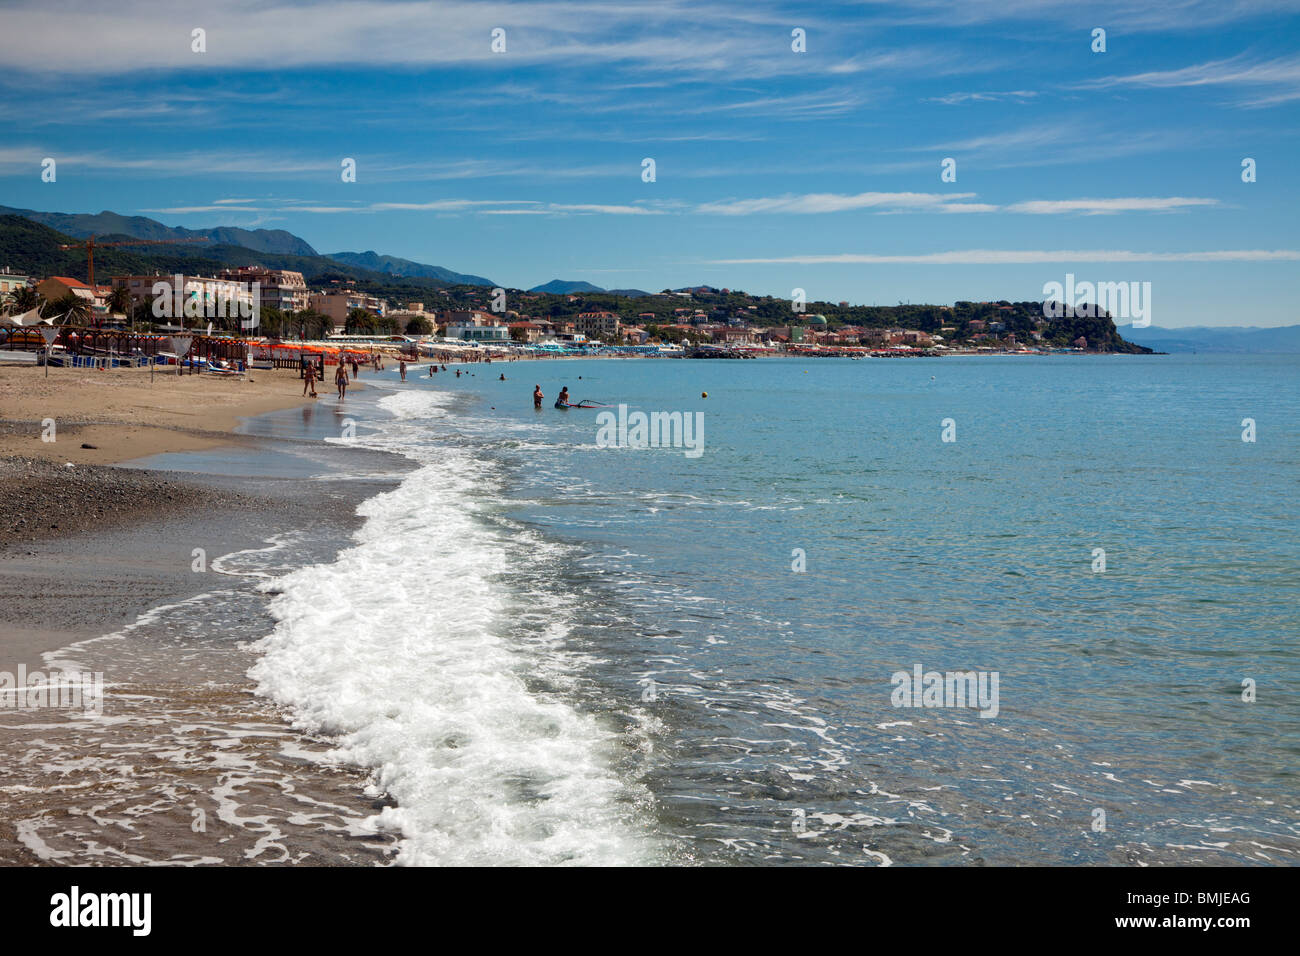 beach scene at Spotorno, Ligurian Riviera, Italy Stock Photo